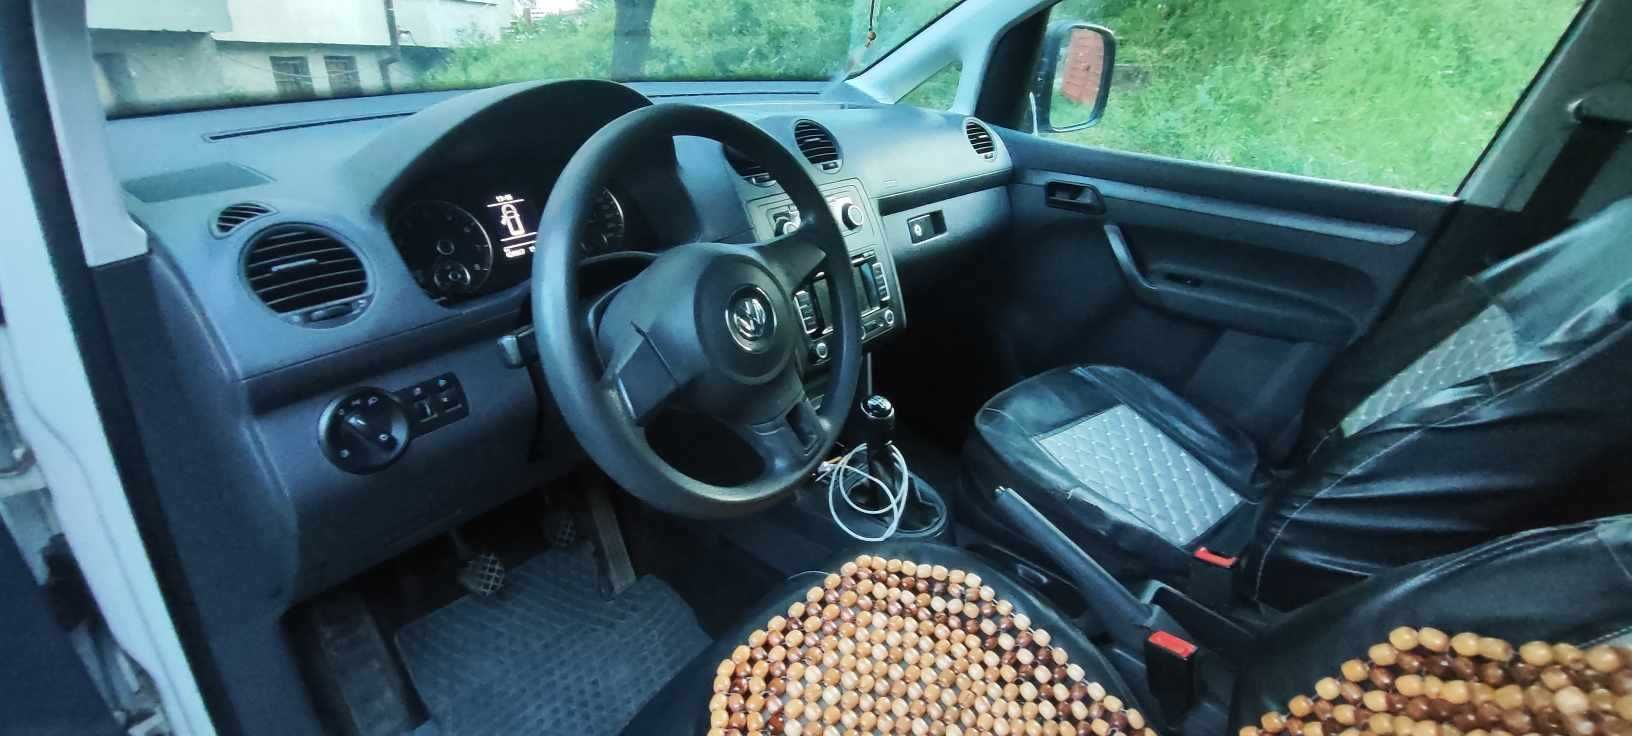 VW caddy фабричен метан бензин + газова уредба